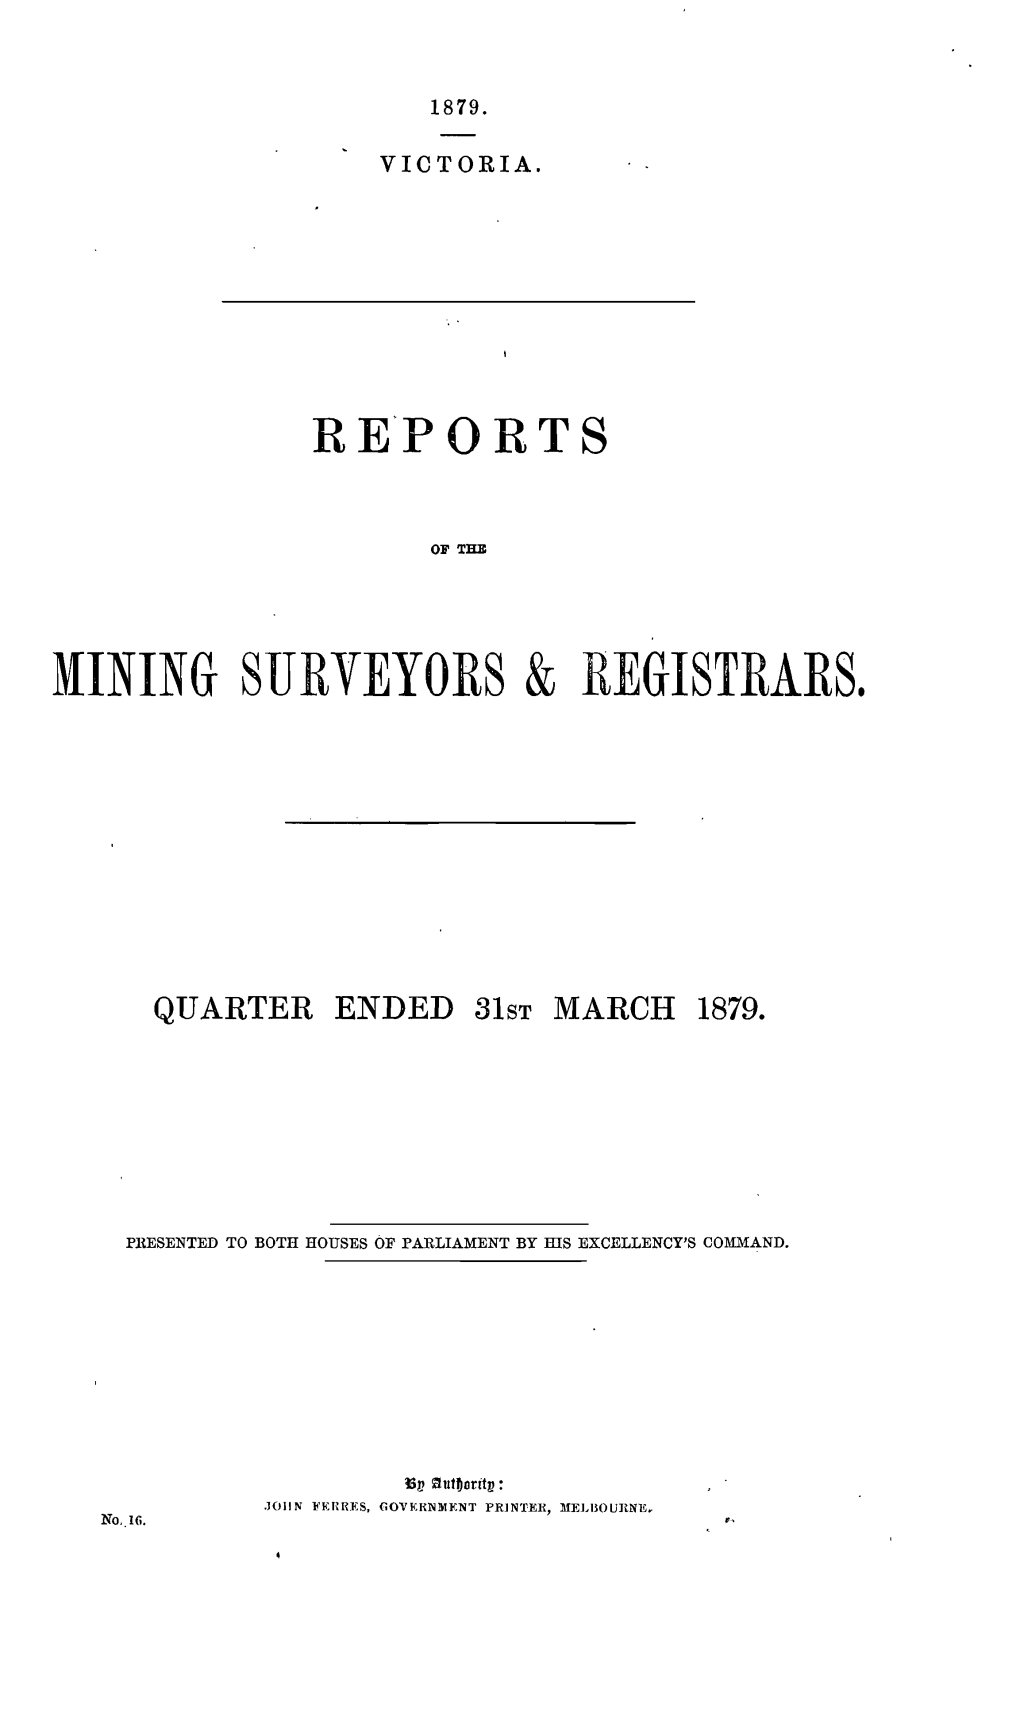 Mining Surveyors & Registrars